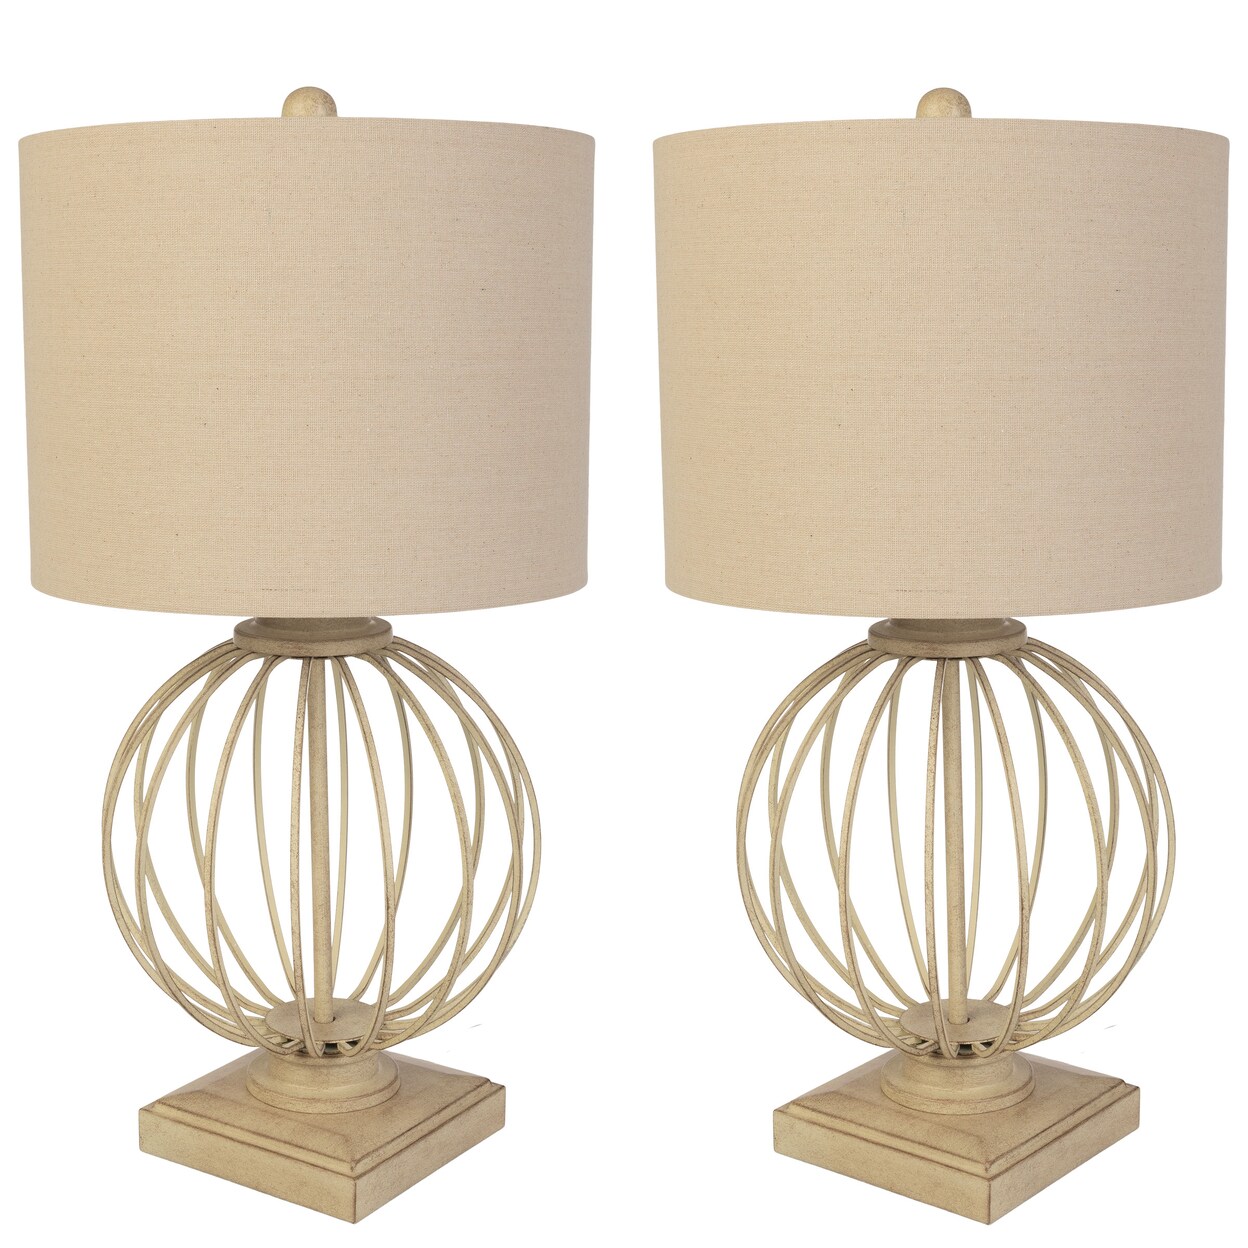 Lavish Home Set of 2 Table Lamps Modern Lamps USB Charging Ports LED Bulbs Living Room Sand